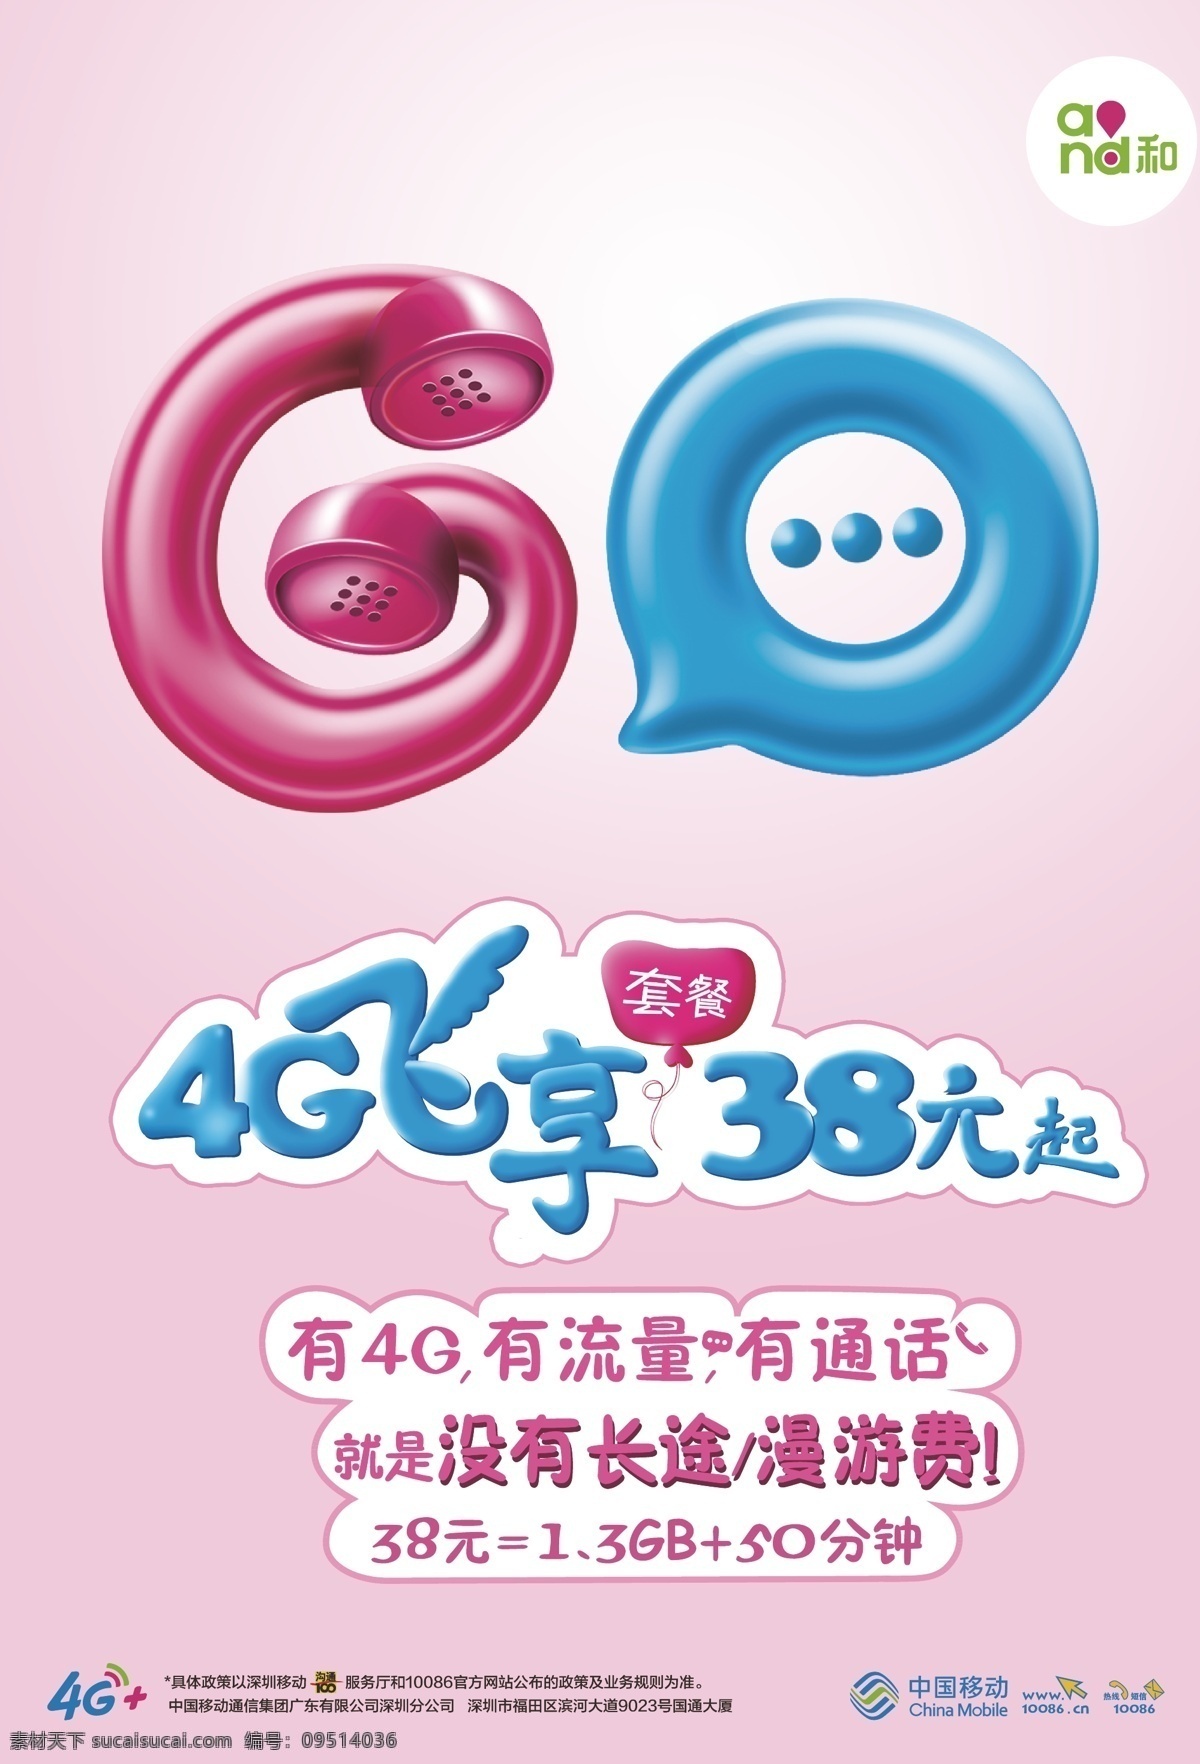 go 中国移动海报 4g飞享套餐 38元起 4glogo 中国移动 logo 粉色海报 白色